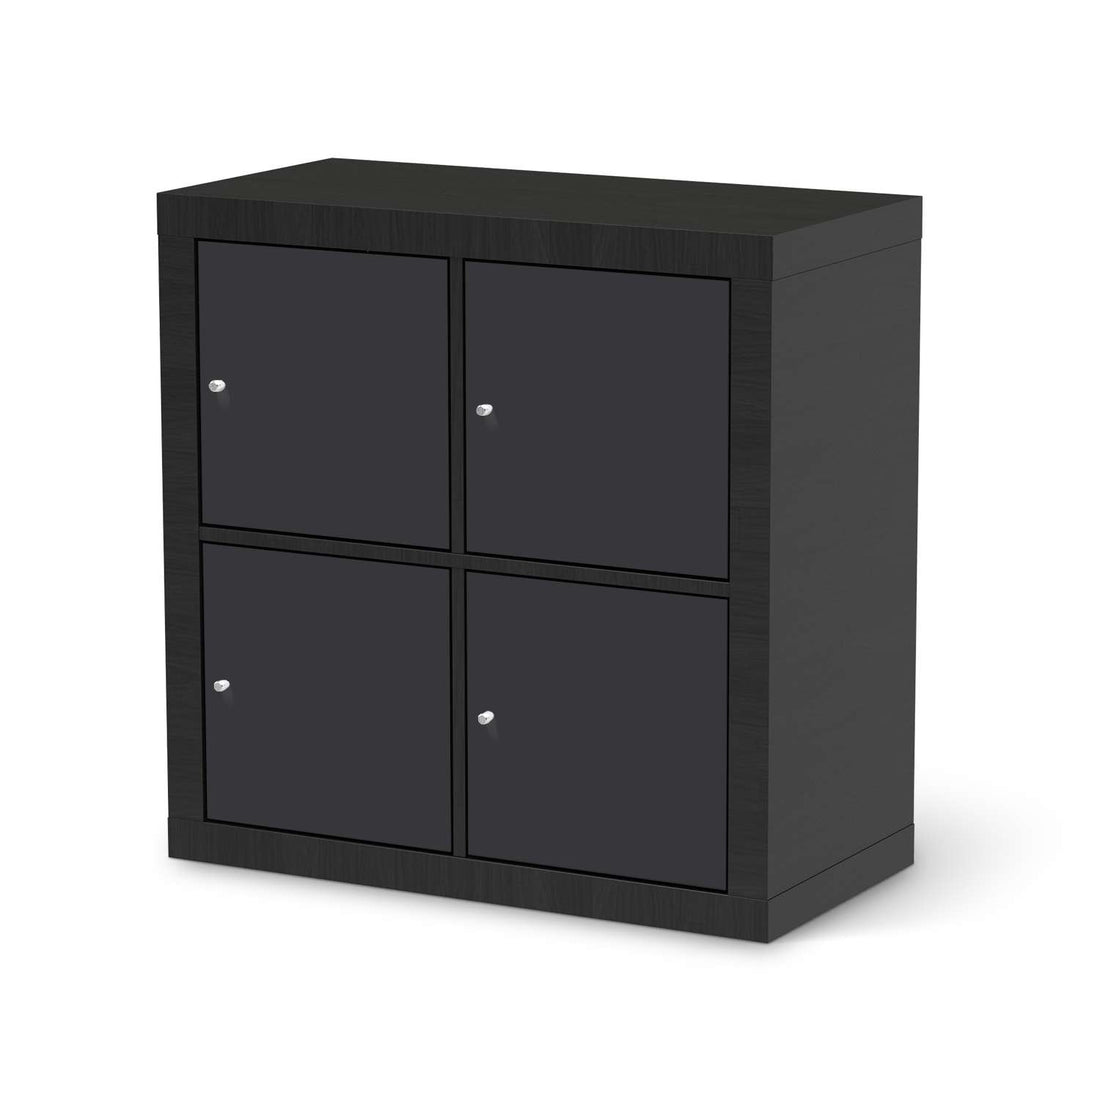 Möbelfolie Grau Dark - IKEA Expedit Regal 4 Türen - schwarz